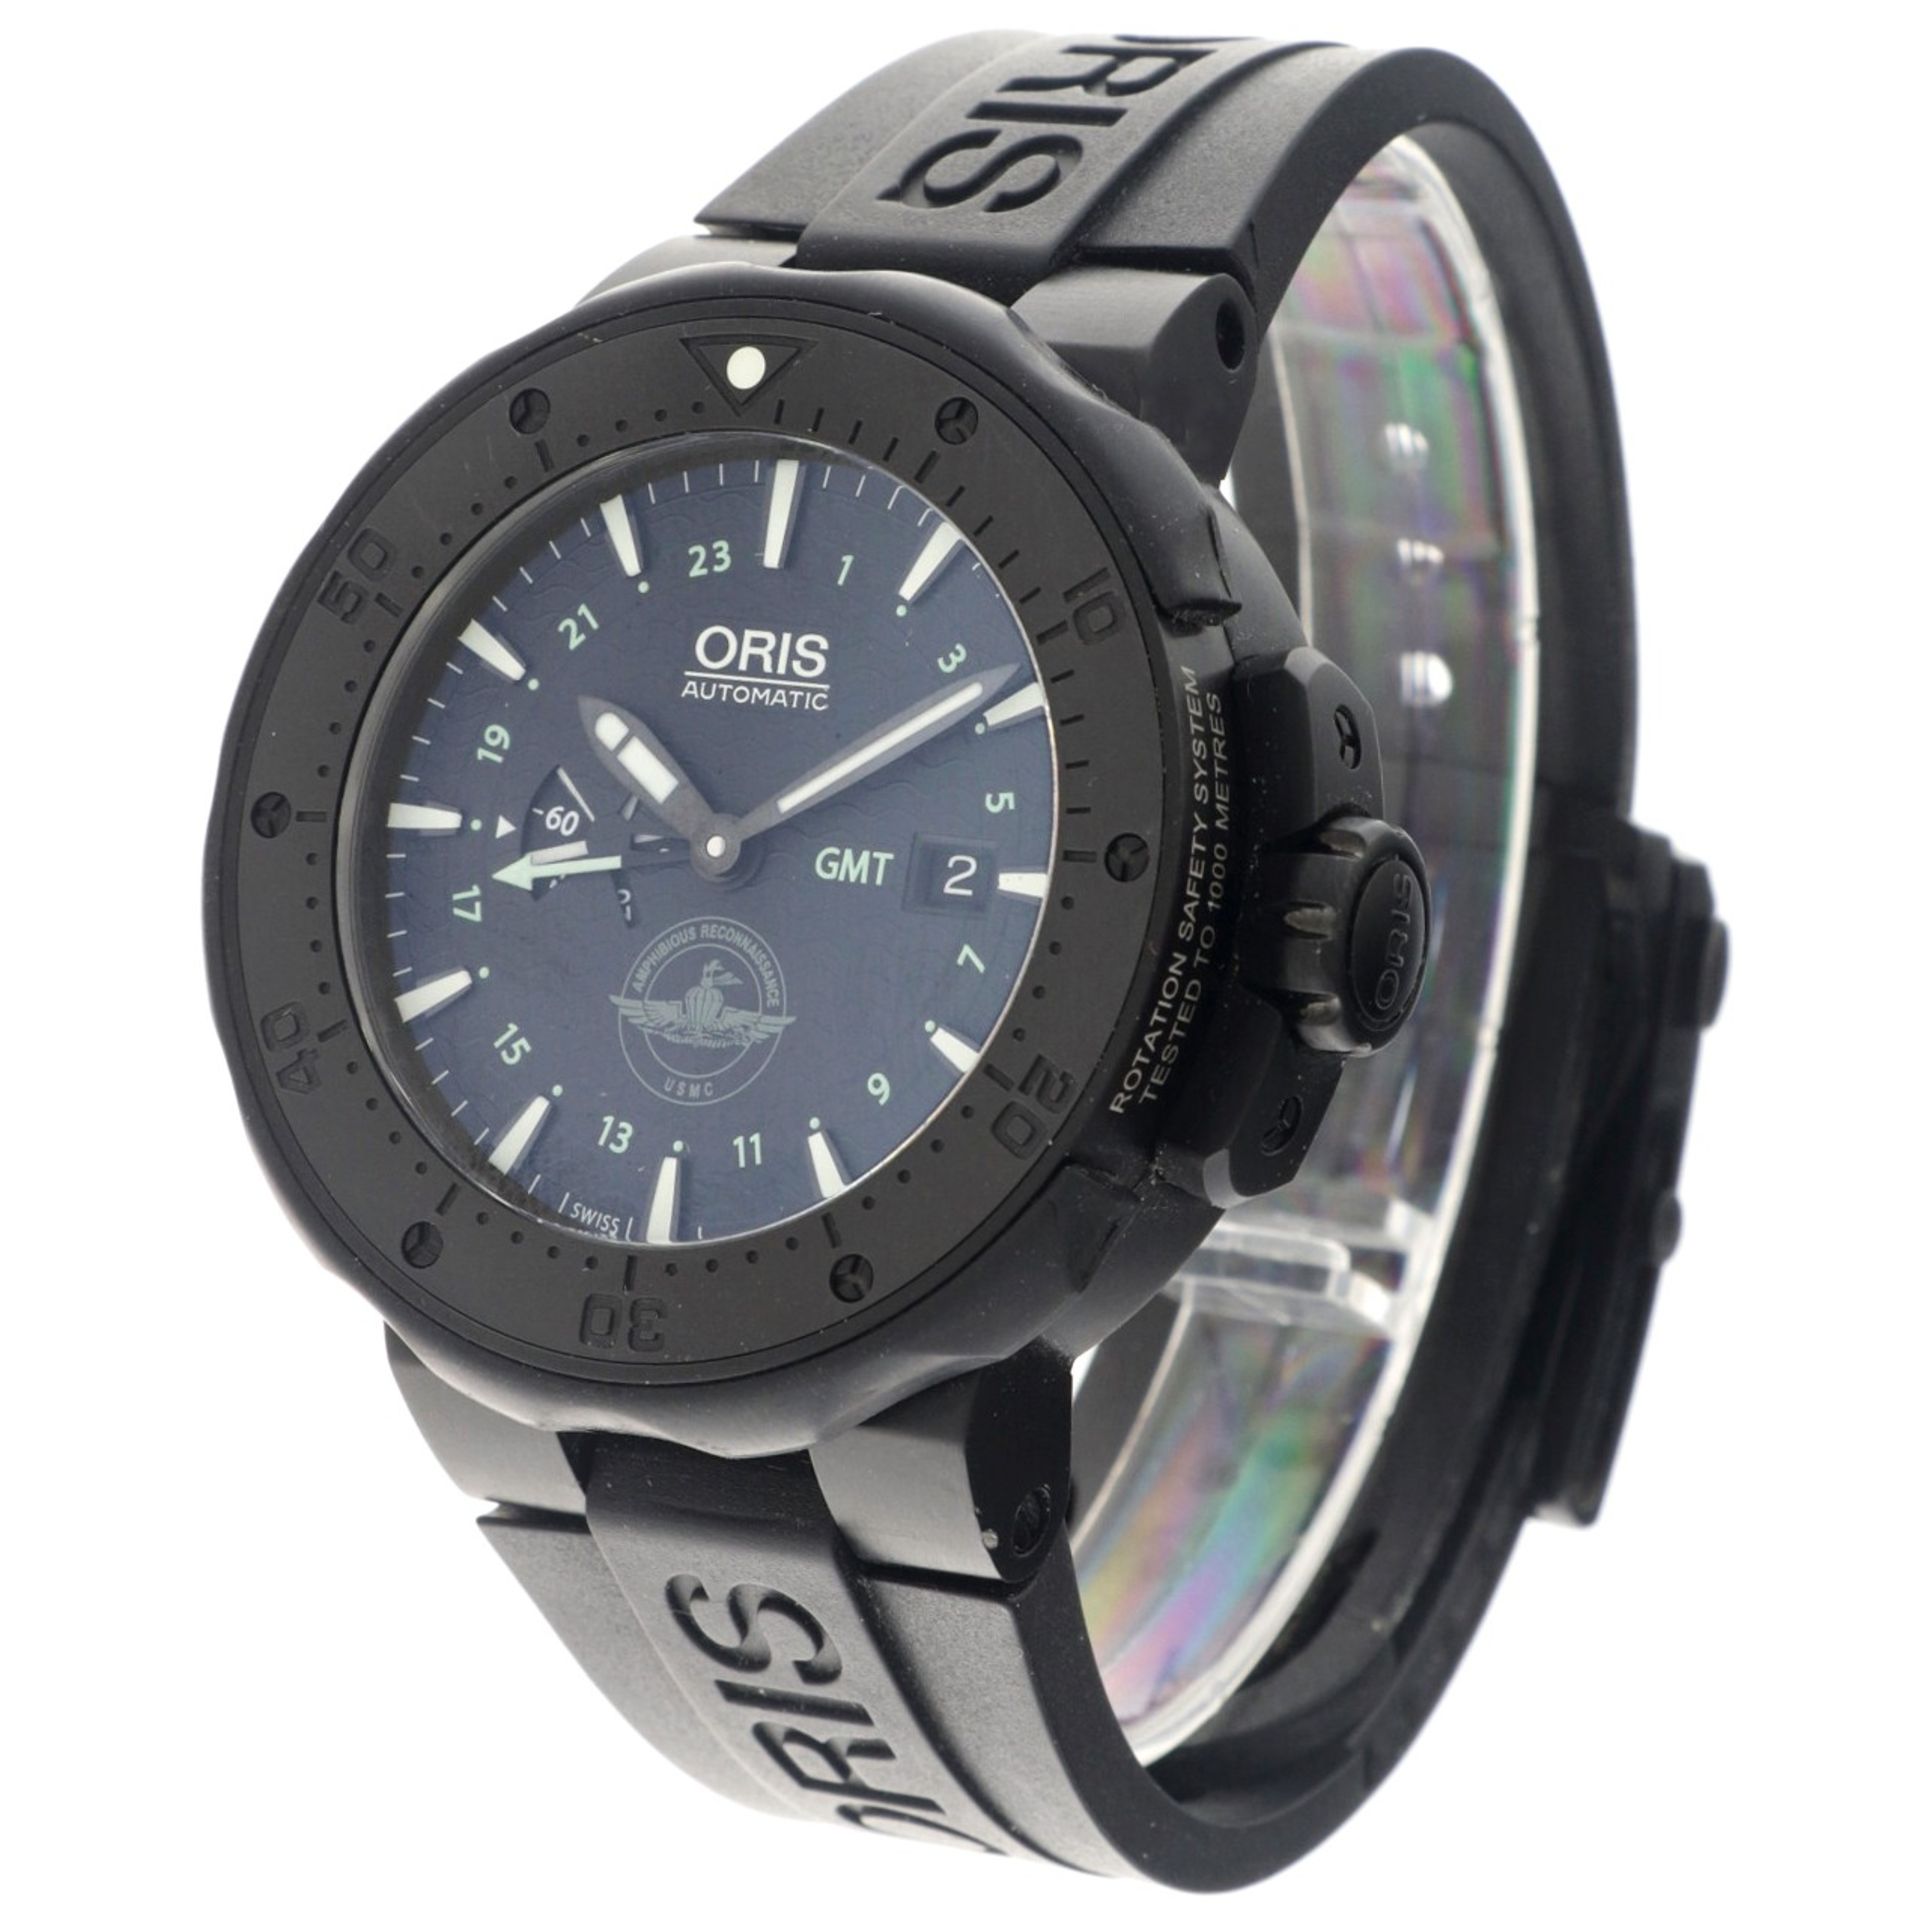 No Reserve - Oris Force Recon GMT 01 747 7715 7754 set - Men's watch - 2015. - Image 2 of 6